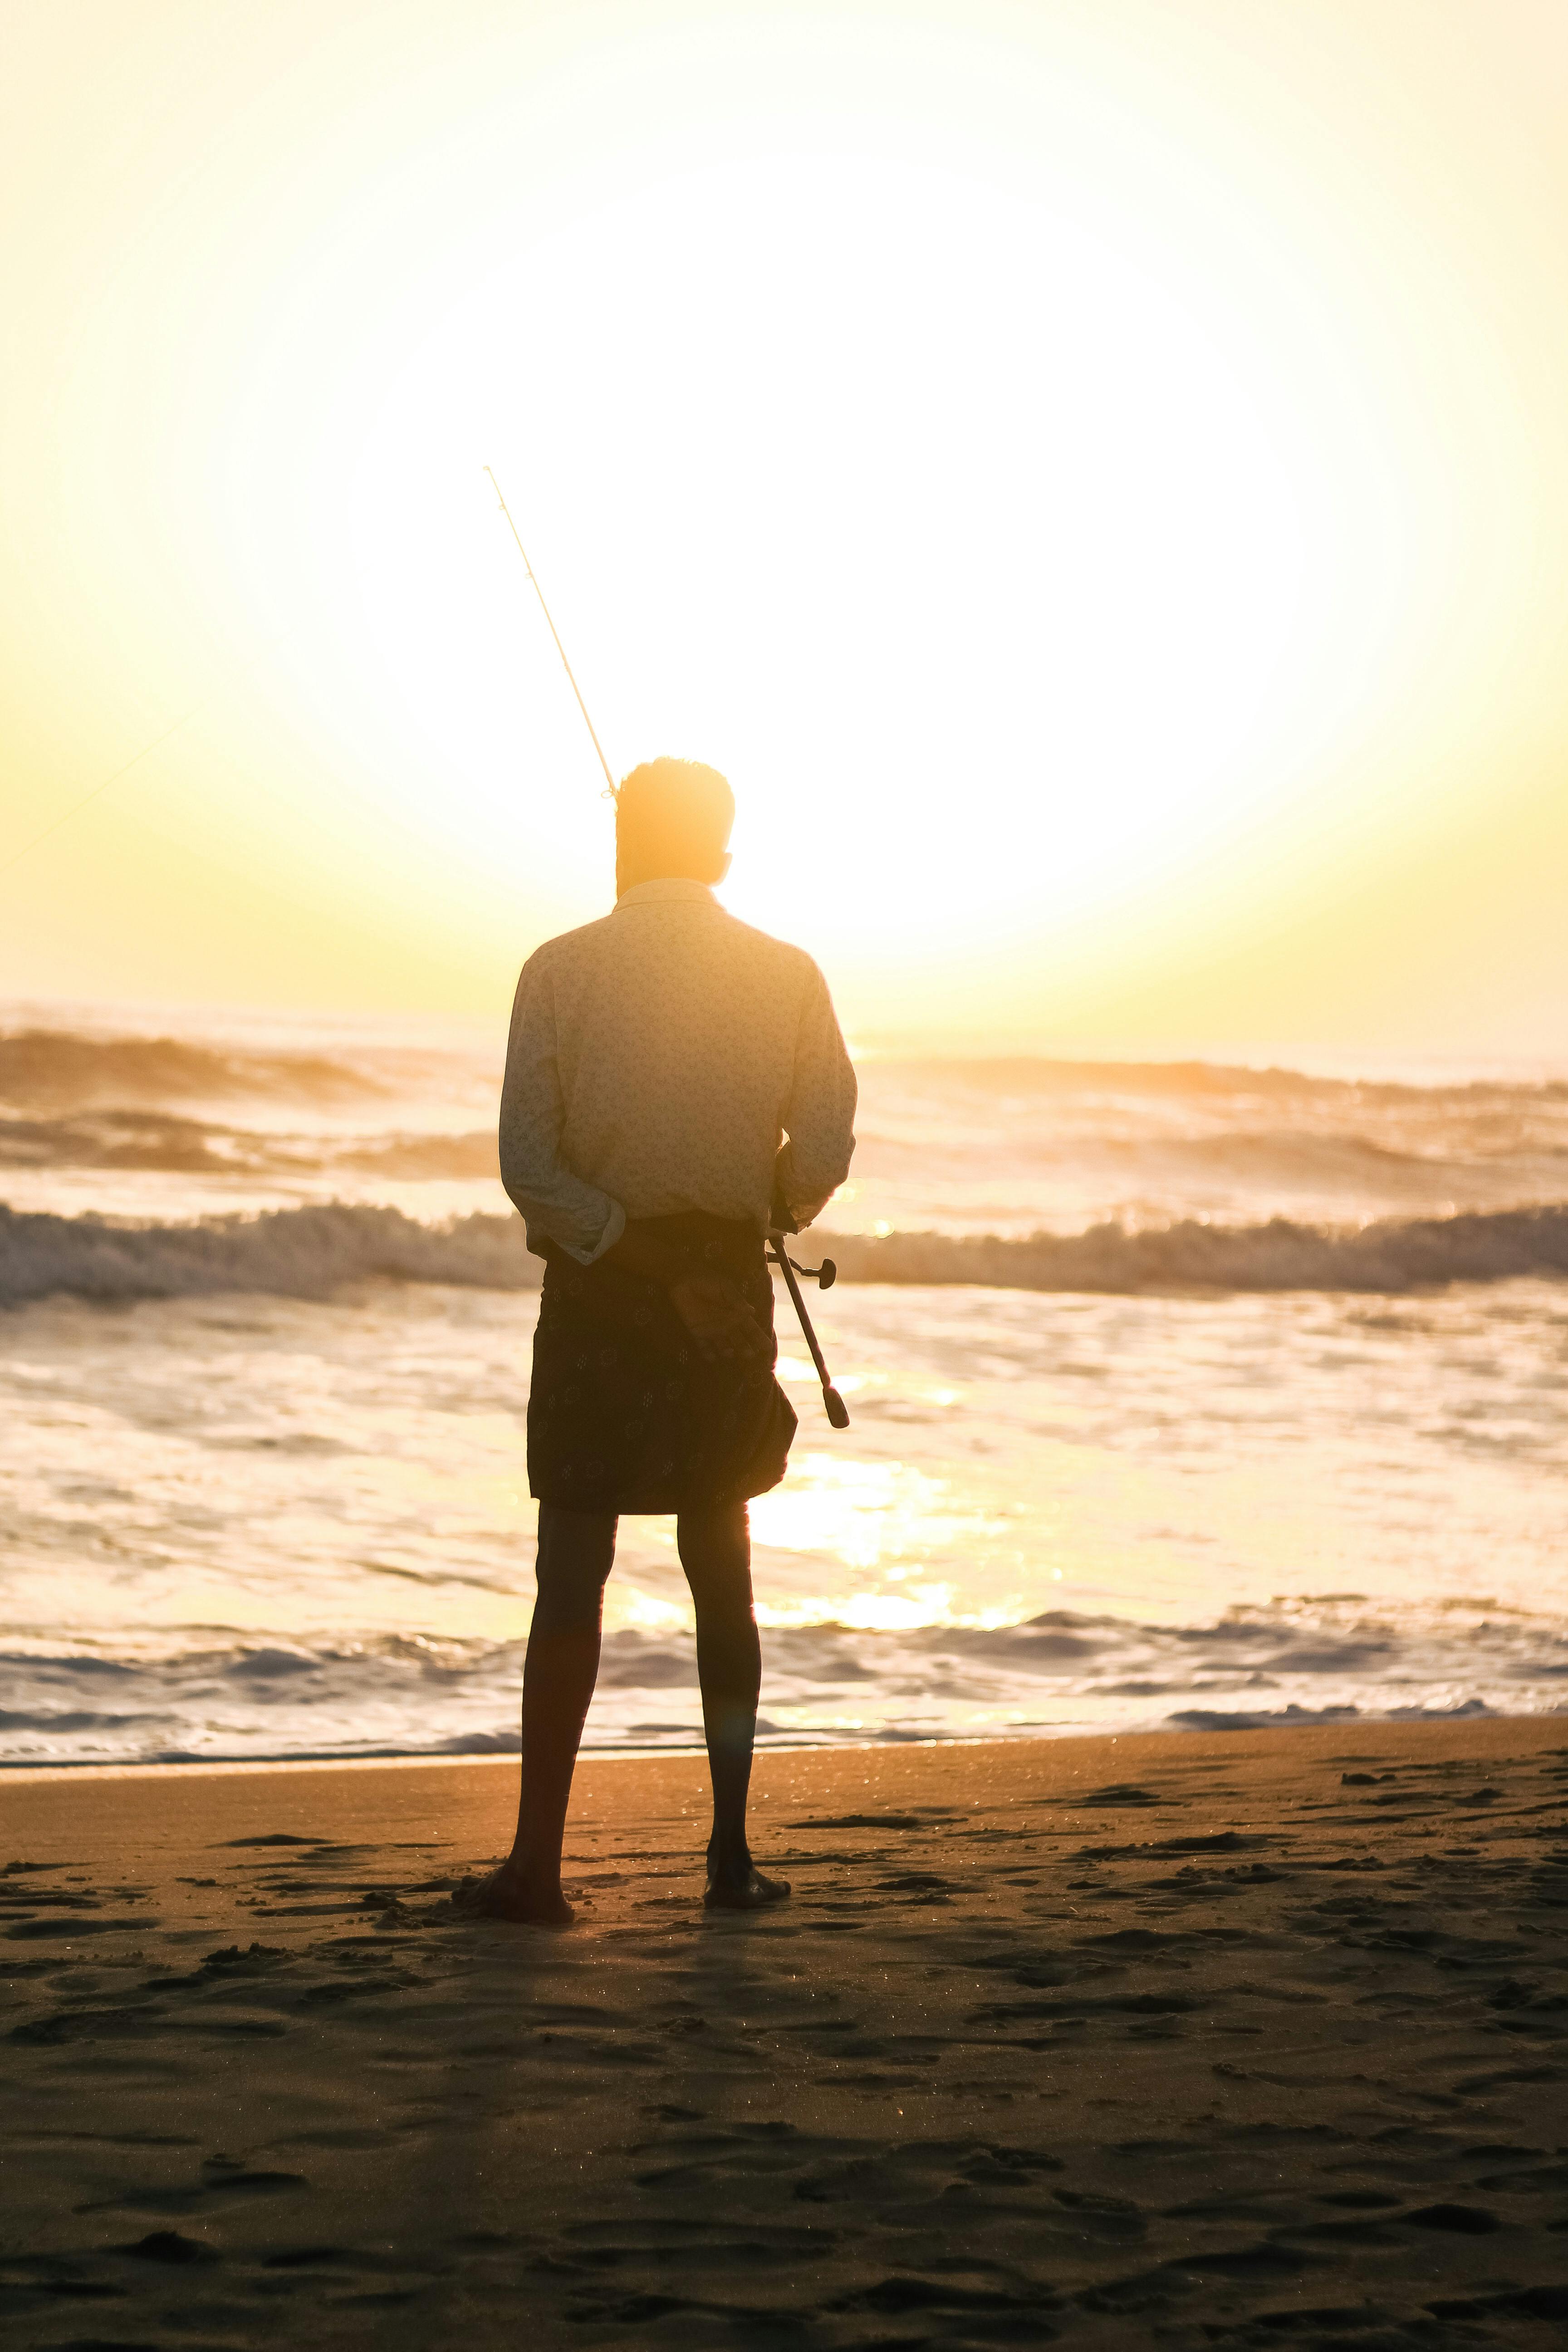 Elderly Man Fishing in the Sea · Free Stock Photo